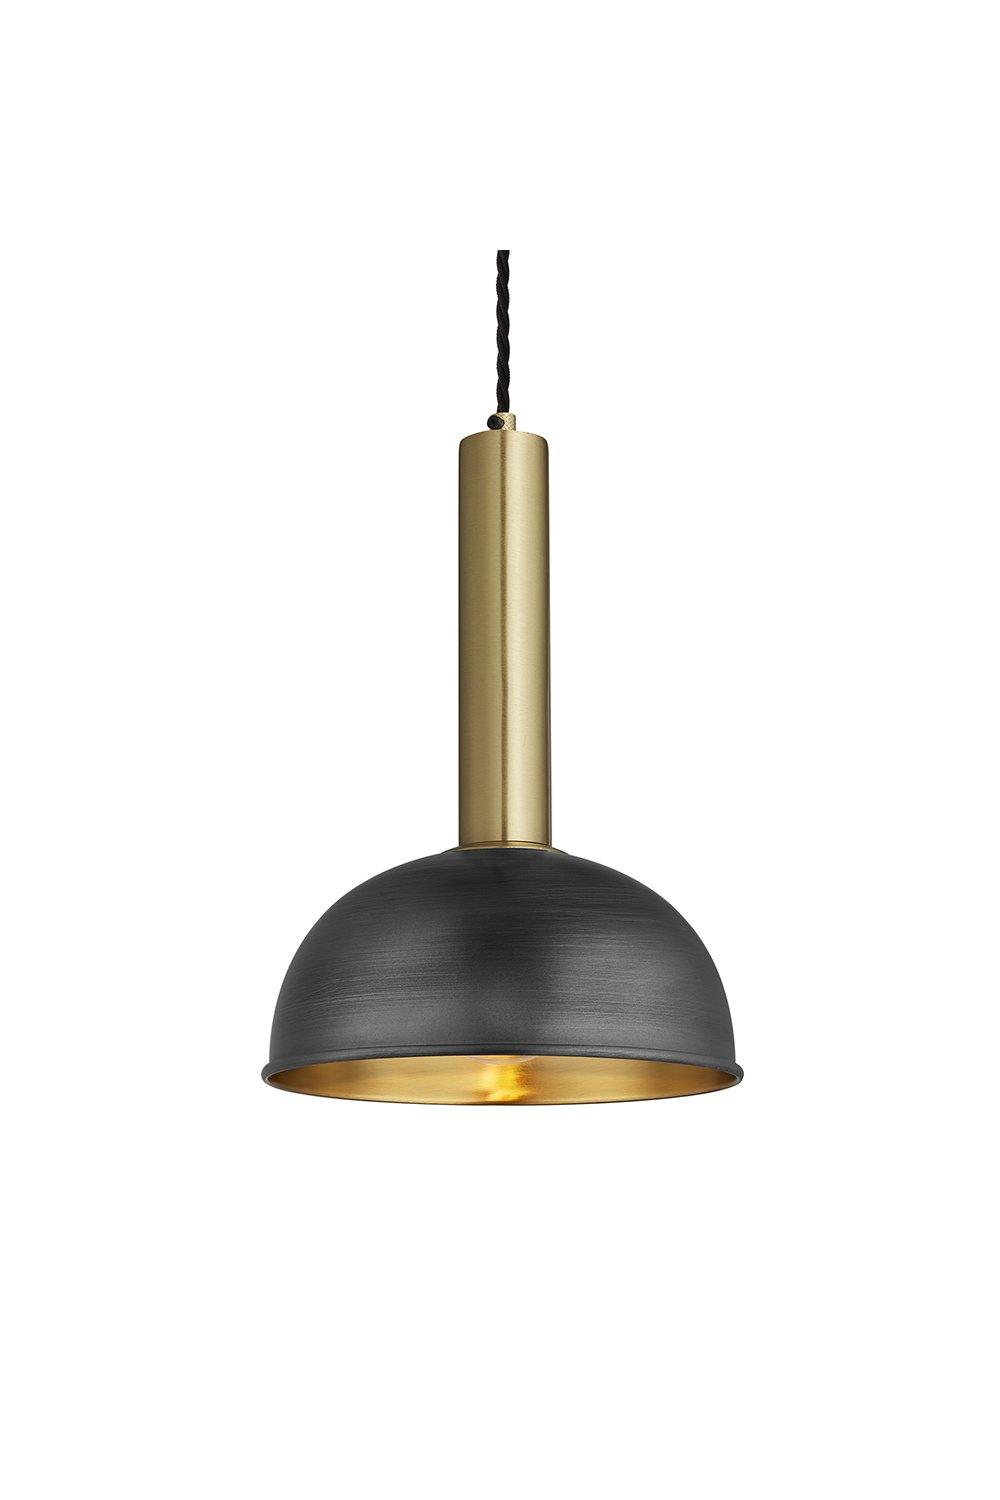 Sleek Cylinder Dome Pendant Light, 8 Inch, Pewter & Brass, Brass Holder